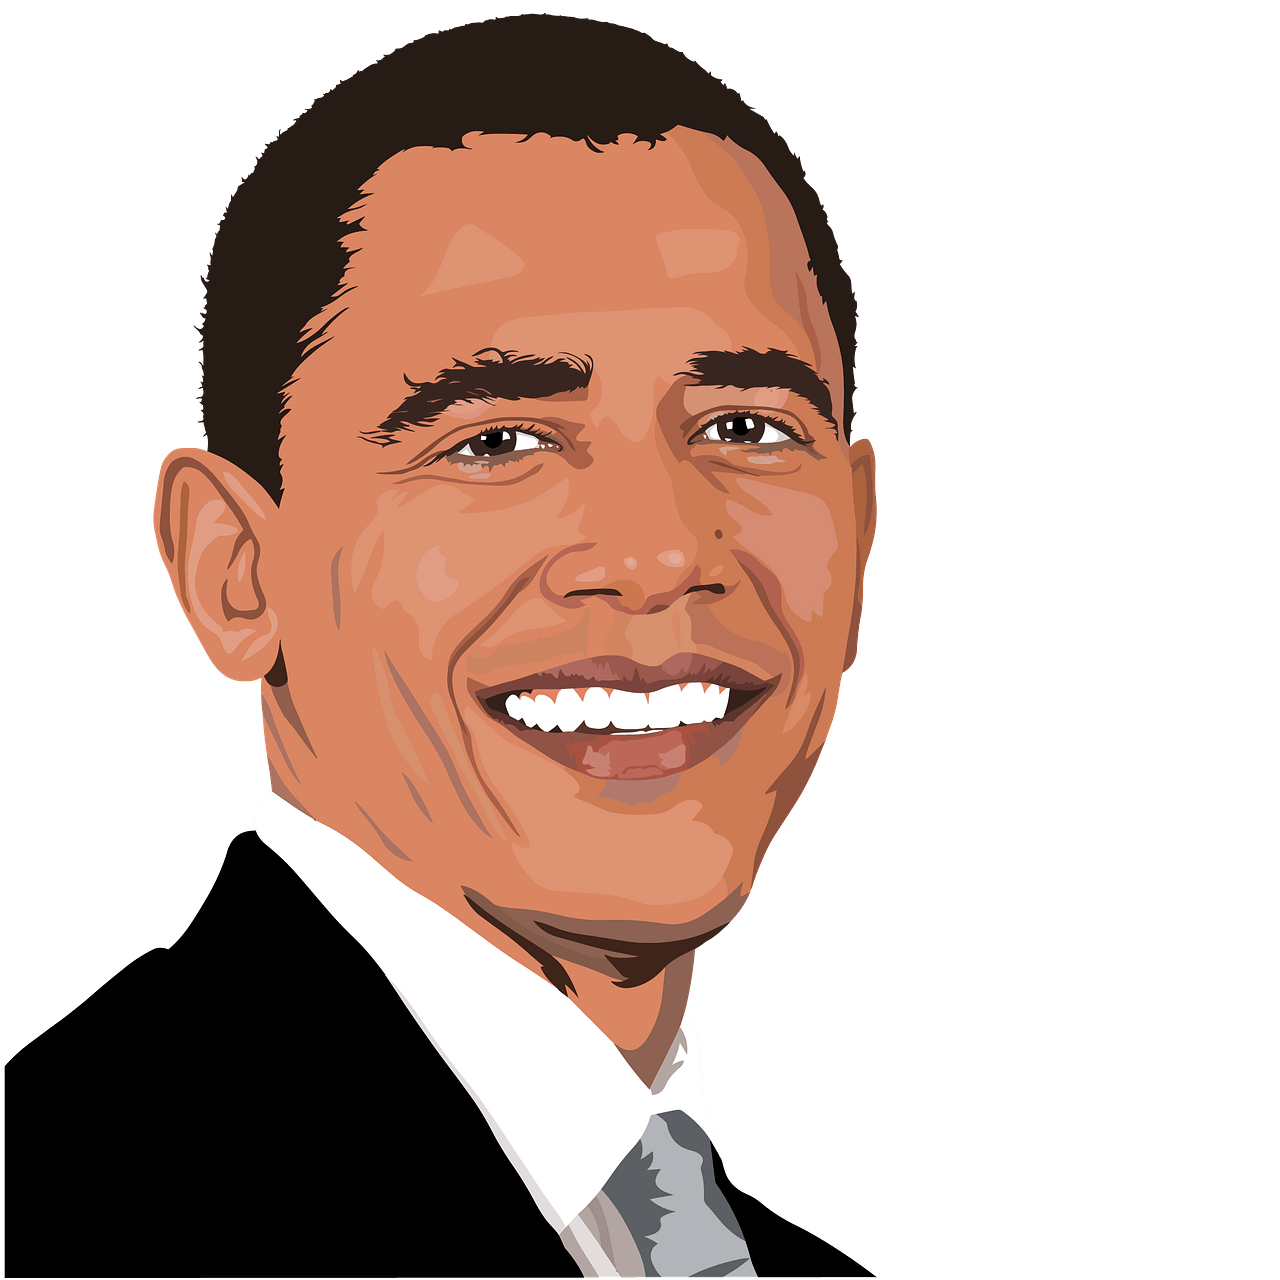 Barack Face Vector Obama PNG Image High Quality PNG Image